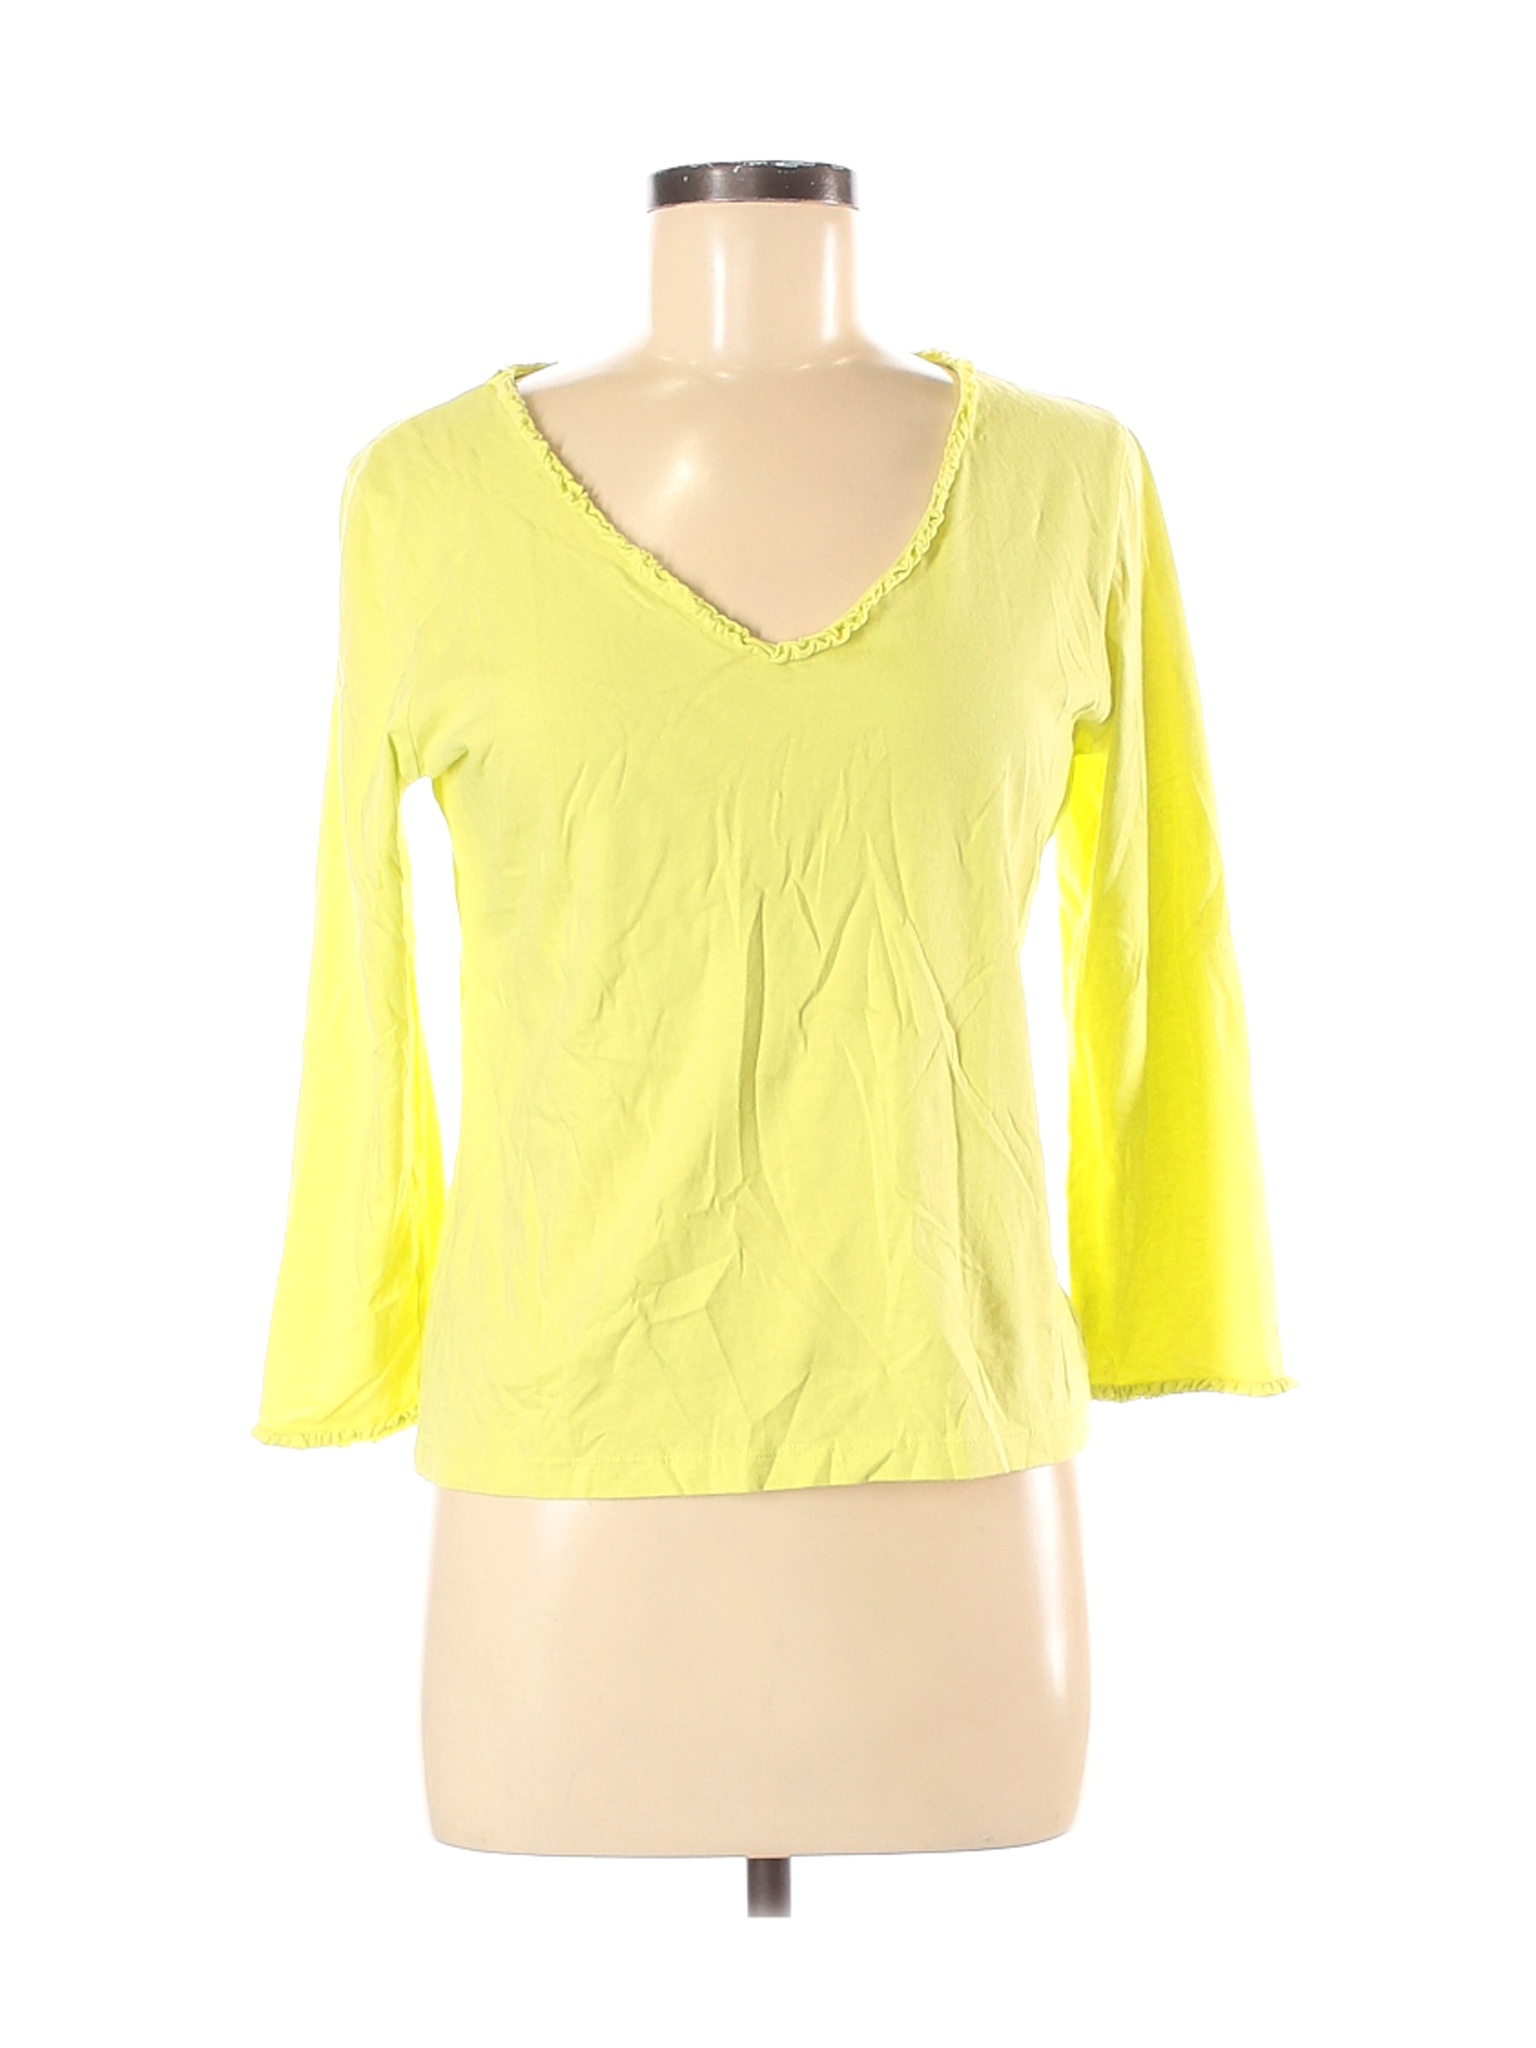 Sigrid Olsen Women Yellow Long Sleeve Top M | eBay